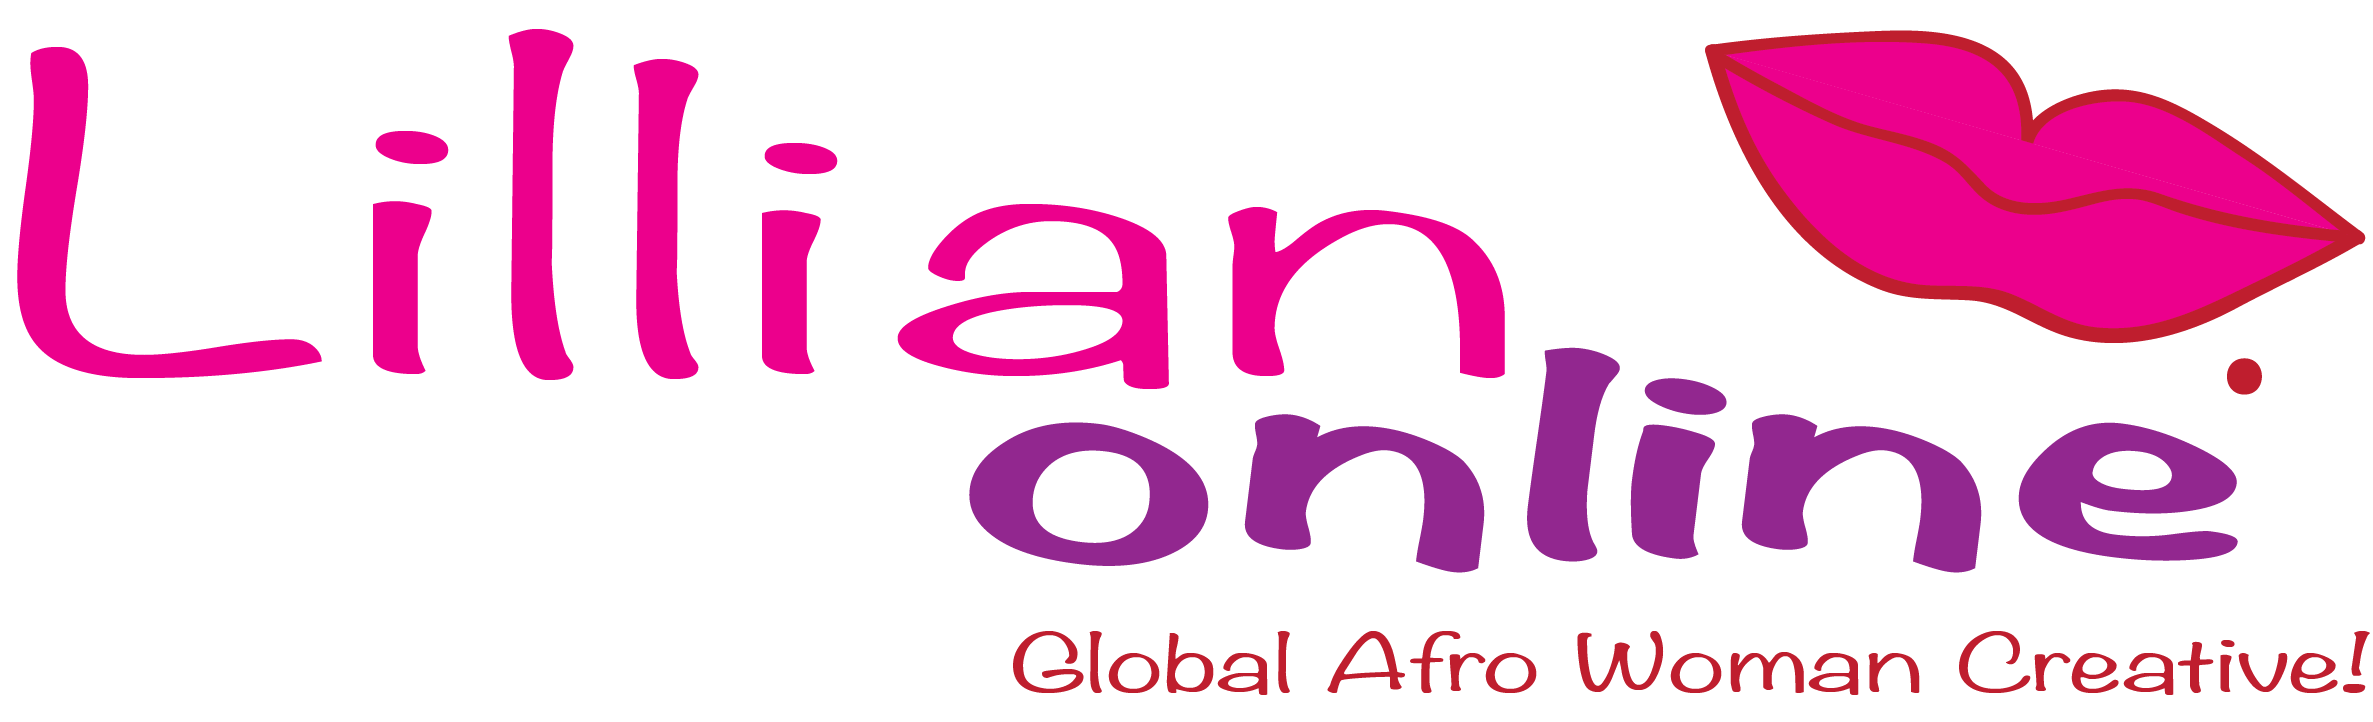 Global Afro Woman Creative Blog